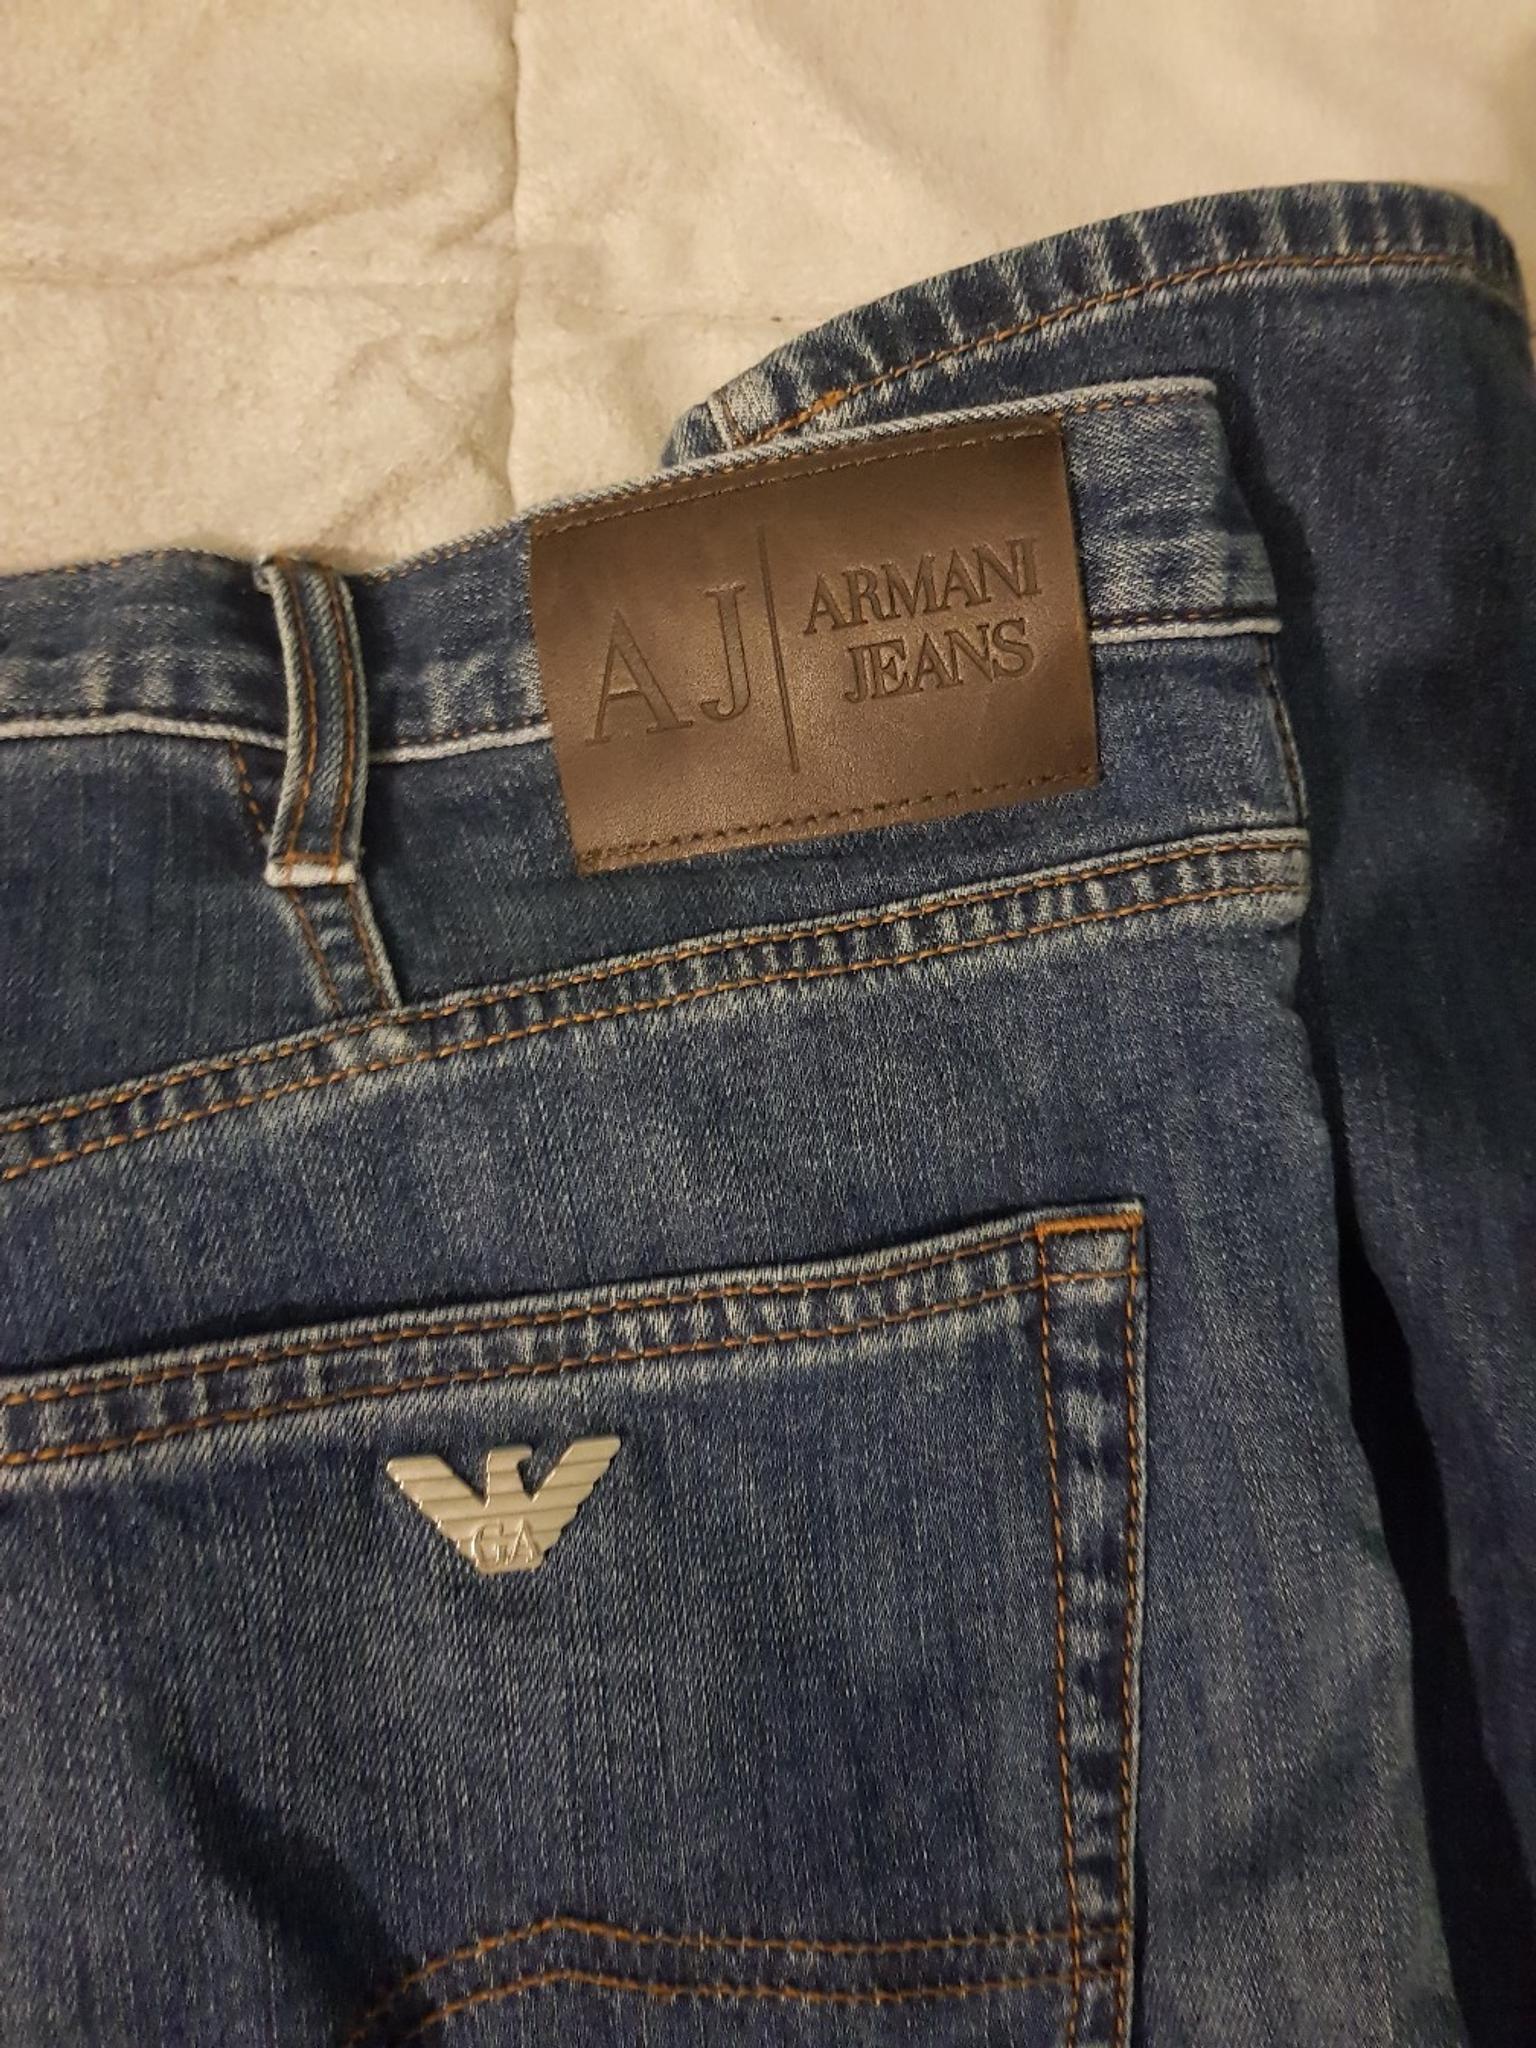 armani jeans j21 sale